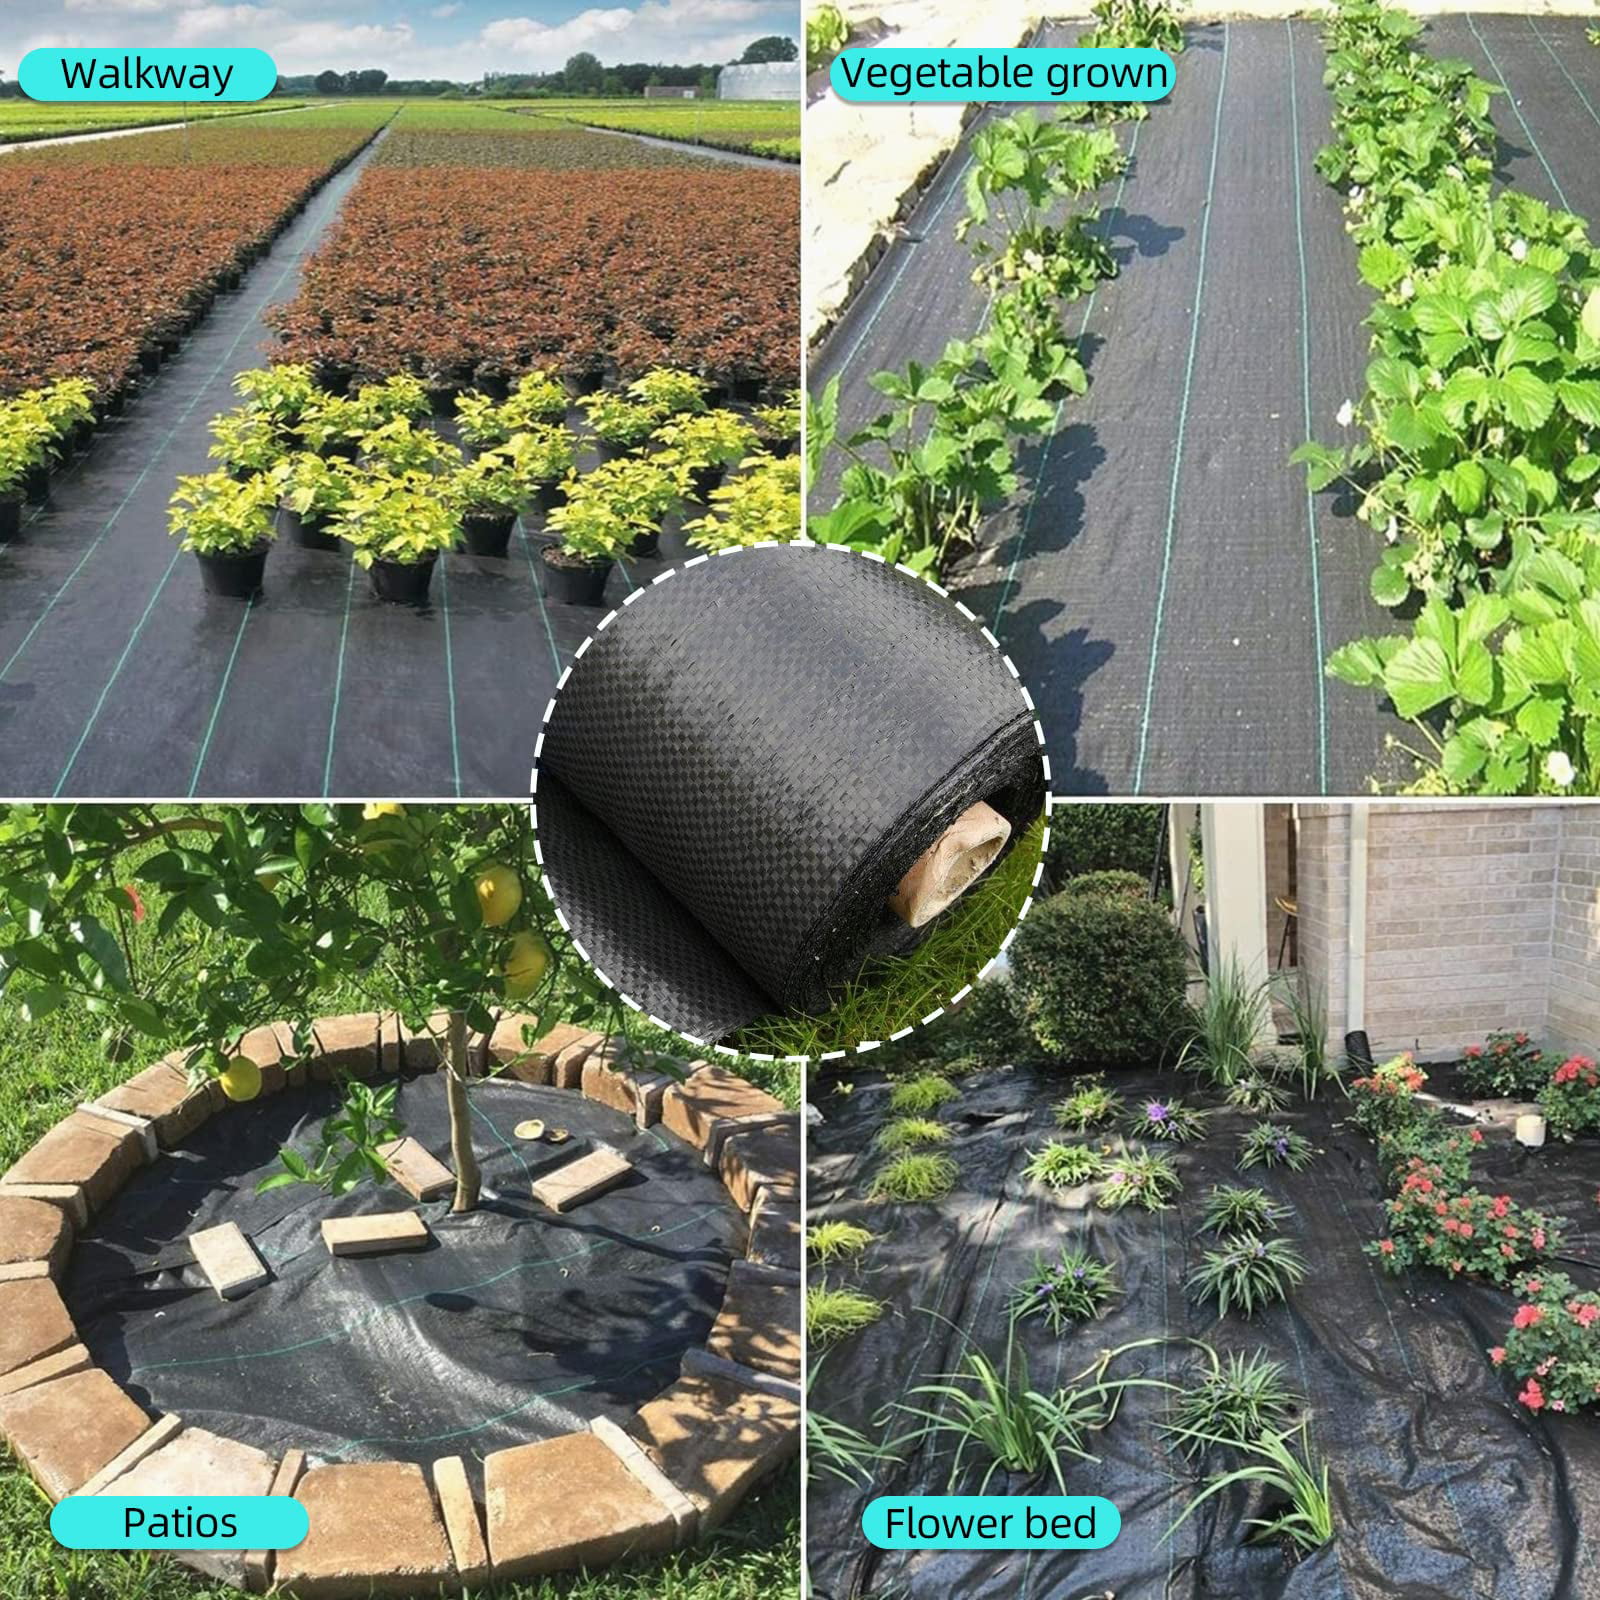 6 ft. x 25 ft. Landscape Garden Mat Weed Barrier for Raised Bed Soil  Erosion Control, 3.0 oz.